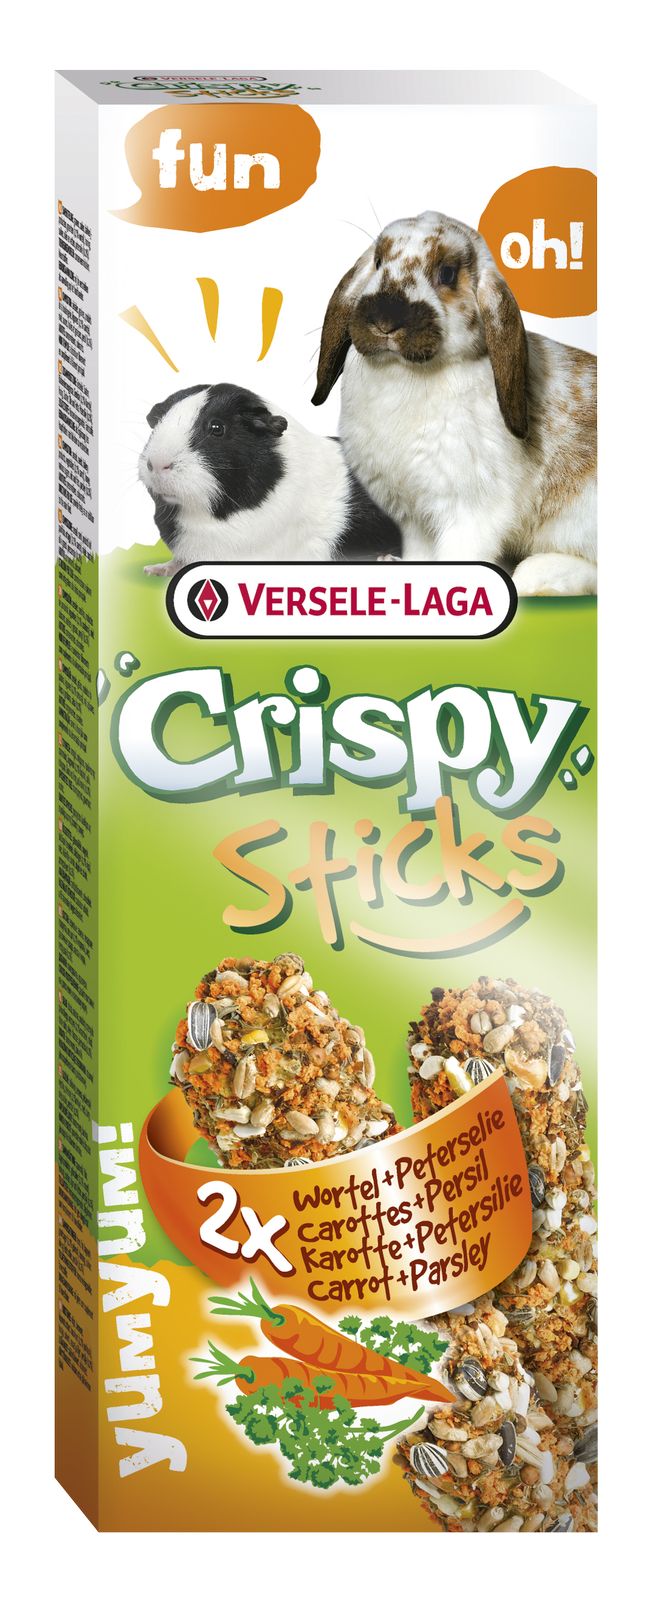 Crispy Sticks Karotte+Petersilie